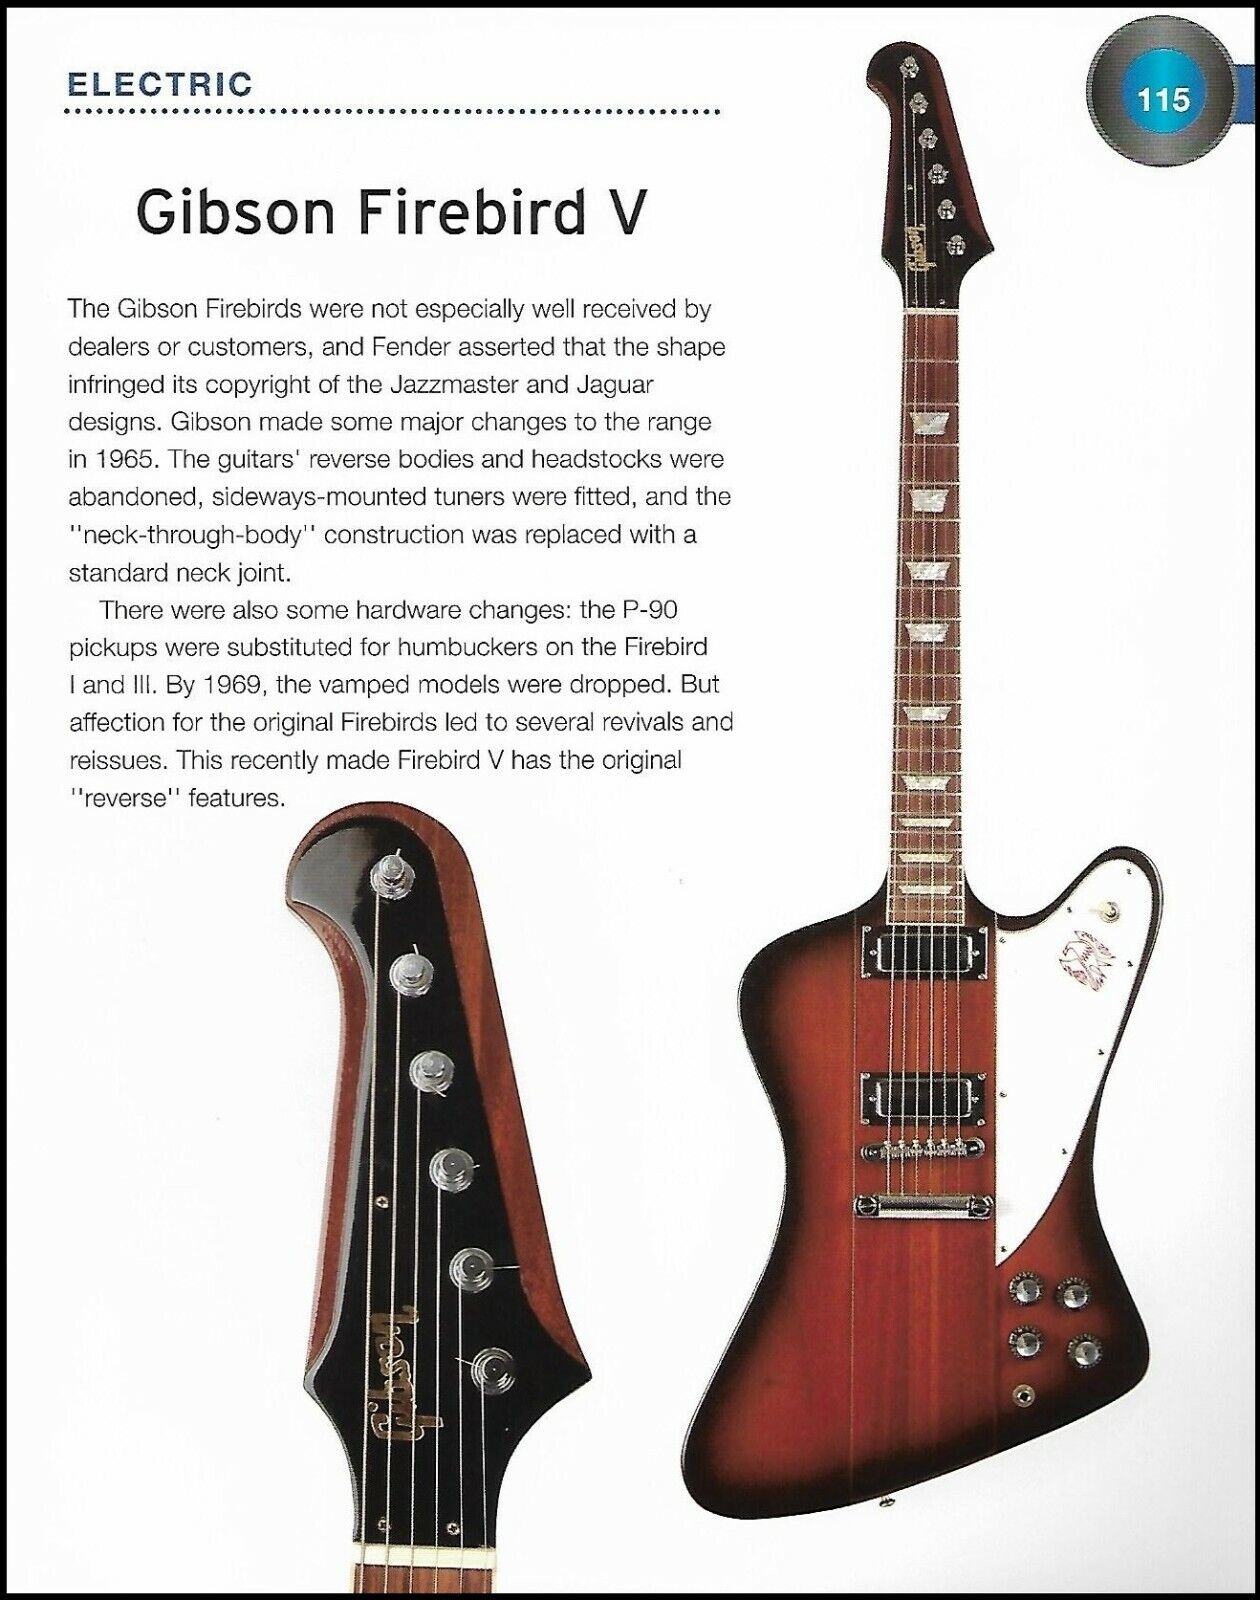 2008 Gibson Firebird V + 1959 EB-O Bass guitar history article 6 x 8 book print